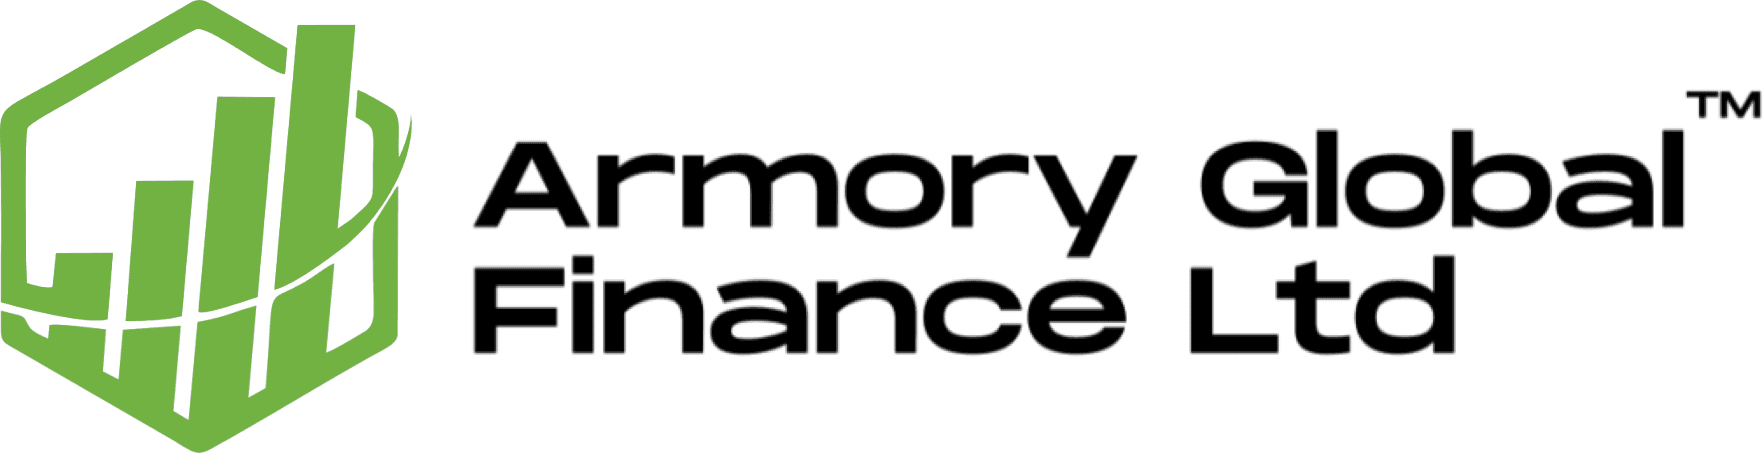 ArmoryGlobalFinance